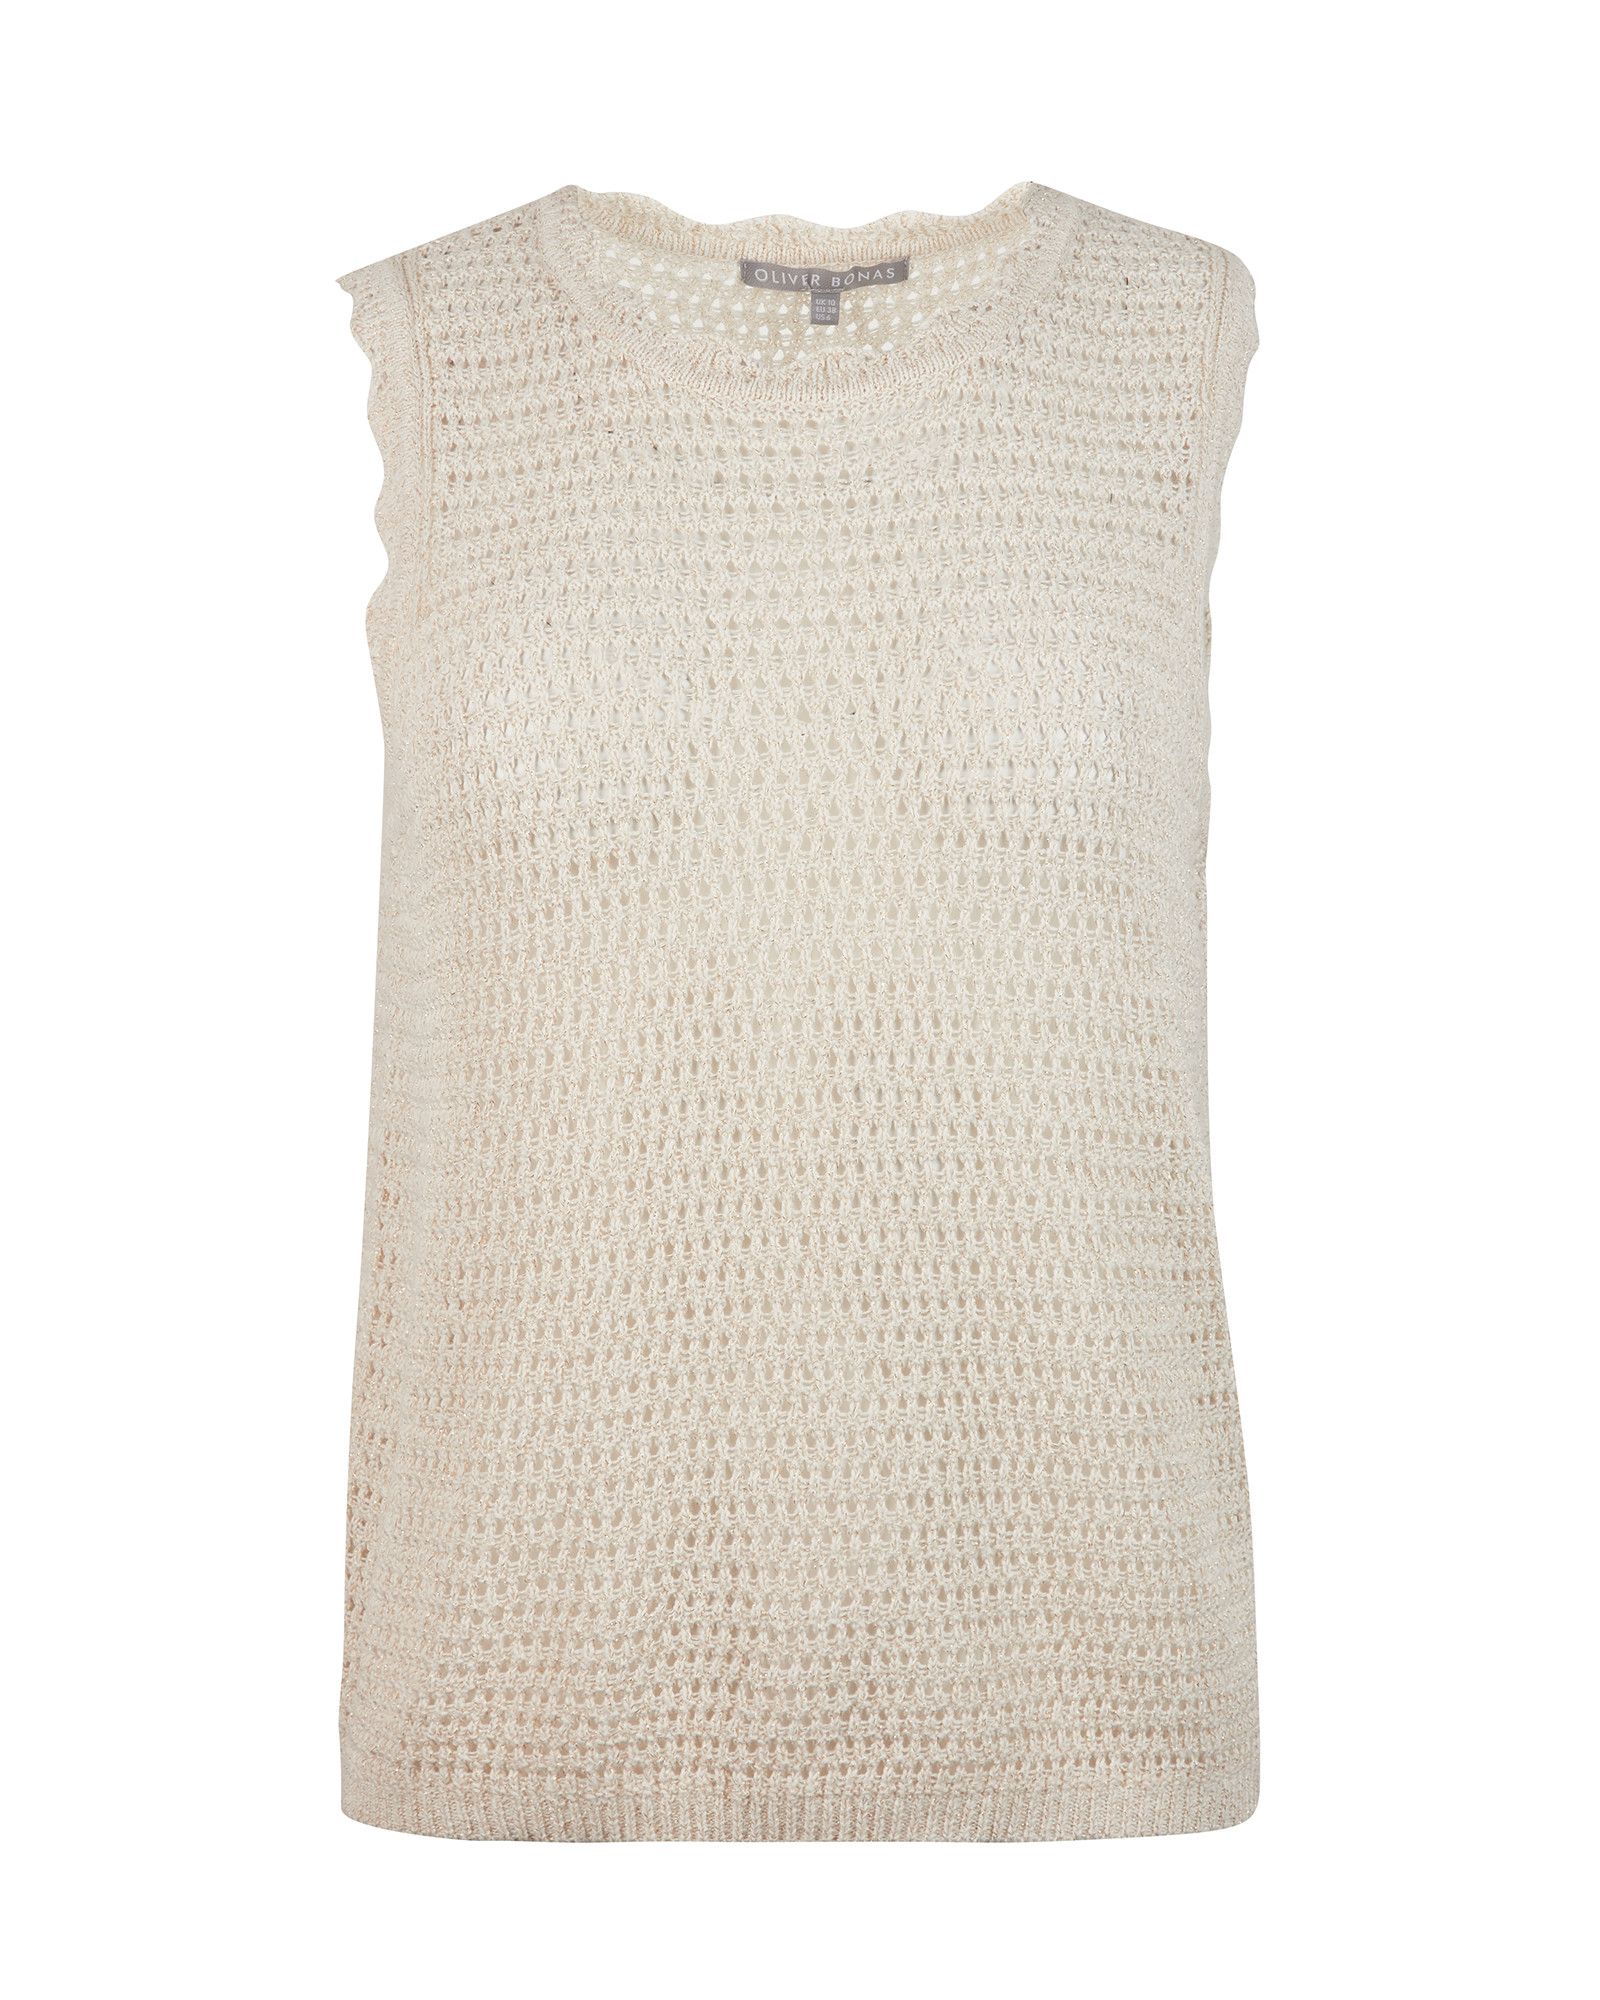 Pointelle Stitch White Knitted Vest Top | Oliver Bonas